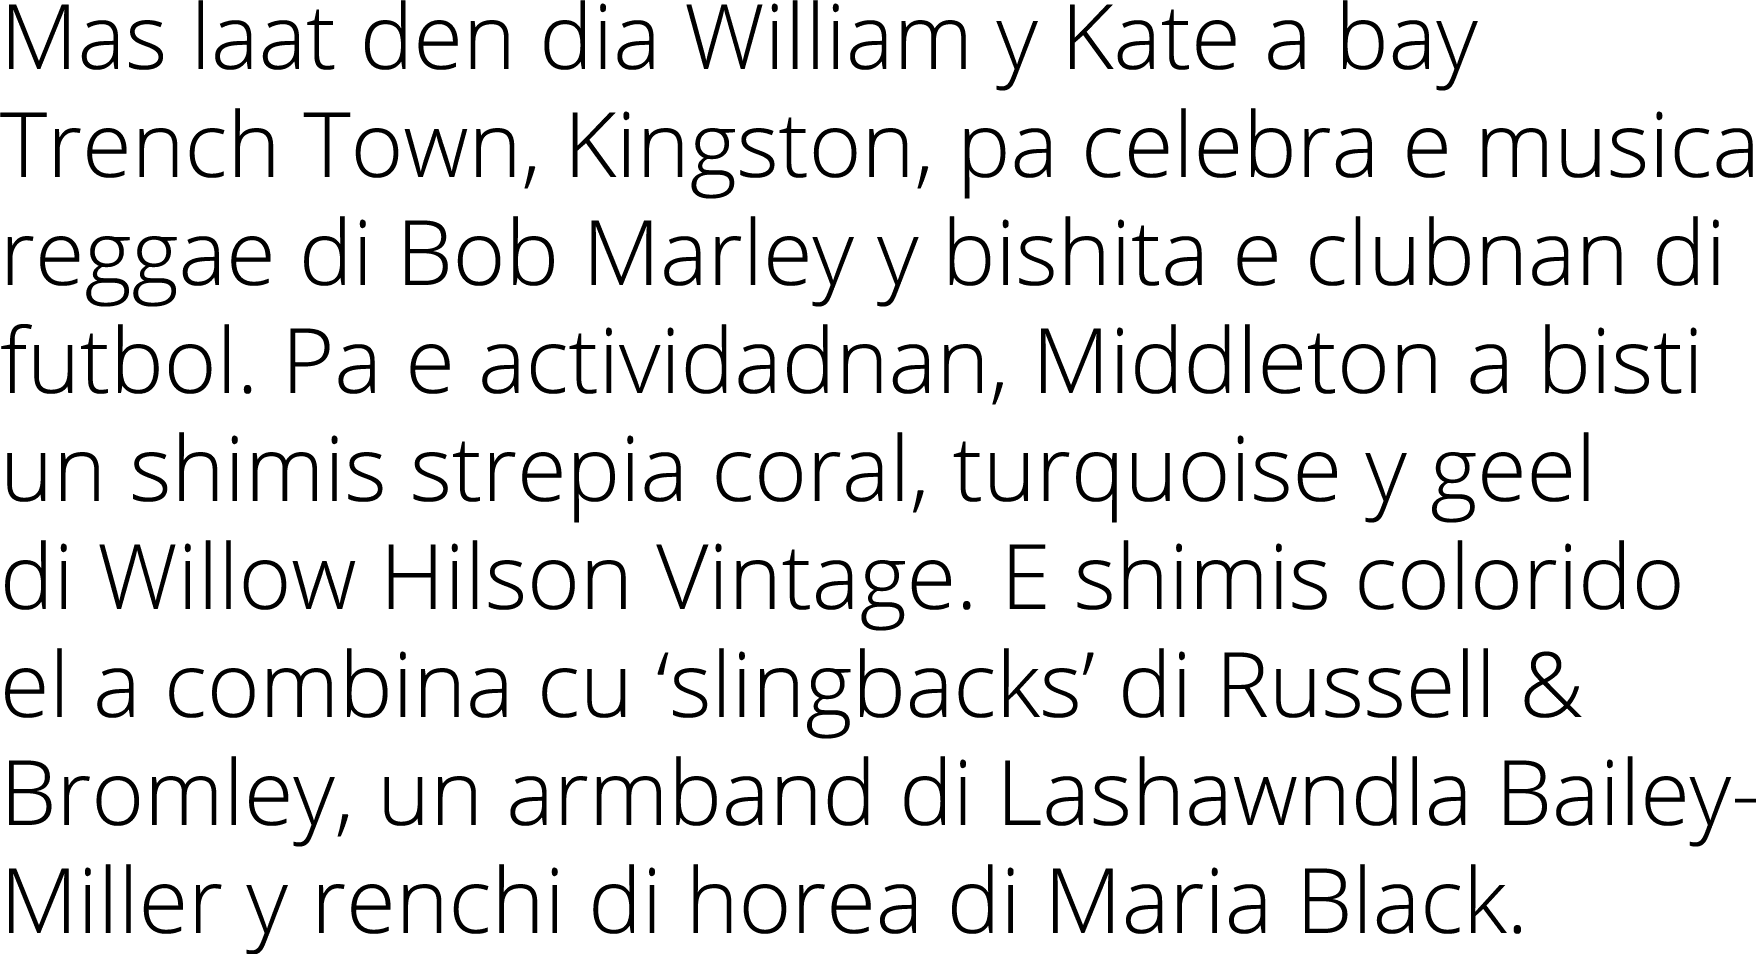 Mas laat den dia William y Kate a bay Trench Town, Kingston, pa celebra e musica reggae di Bob Marley y bishita e clu   